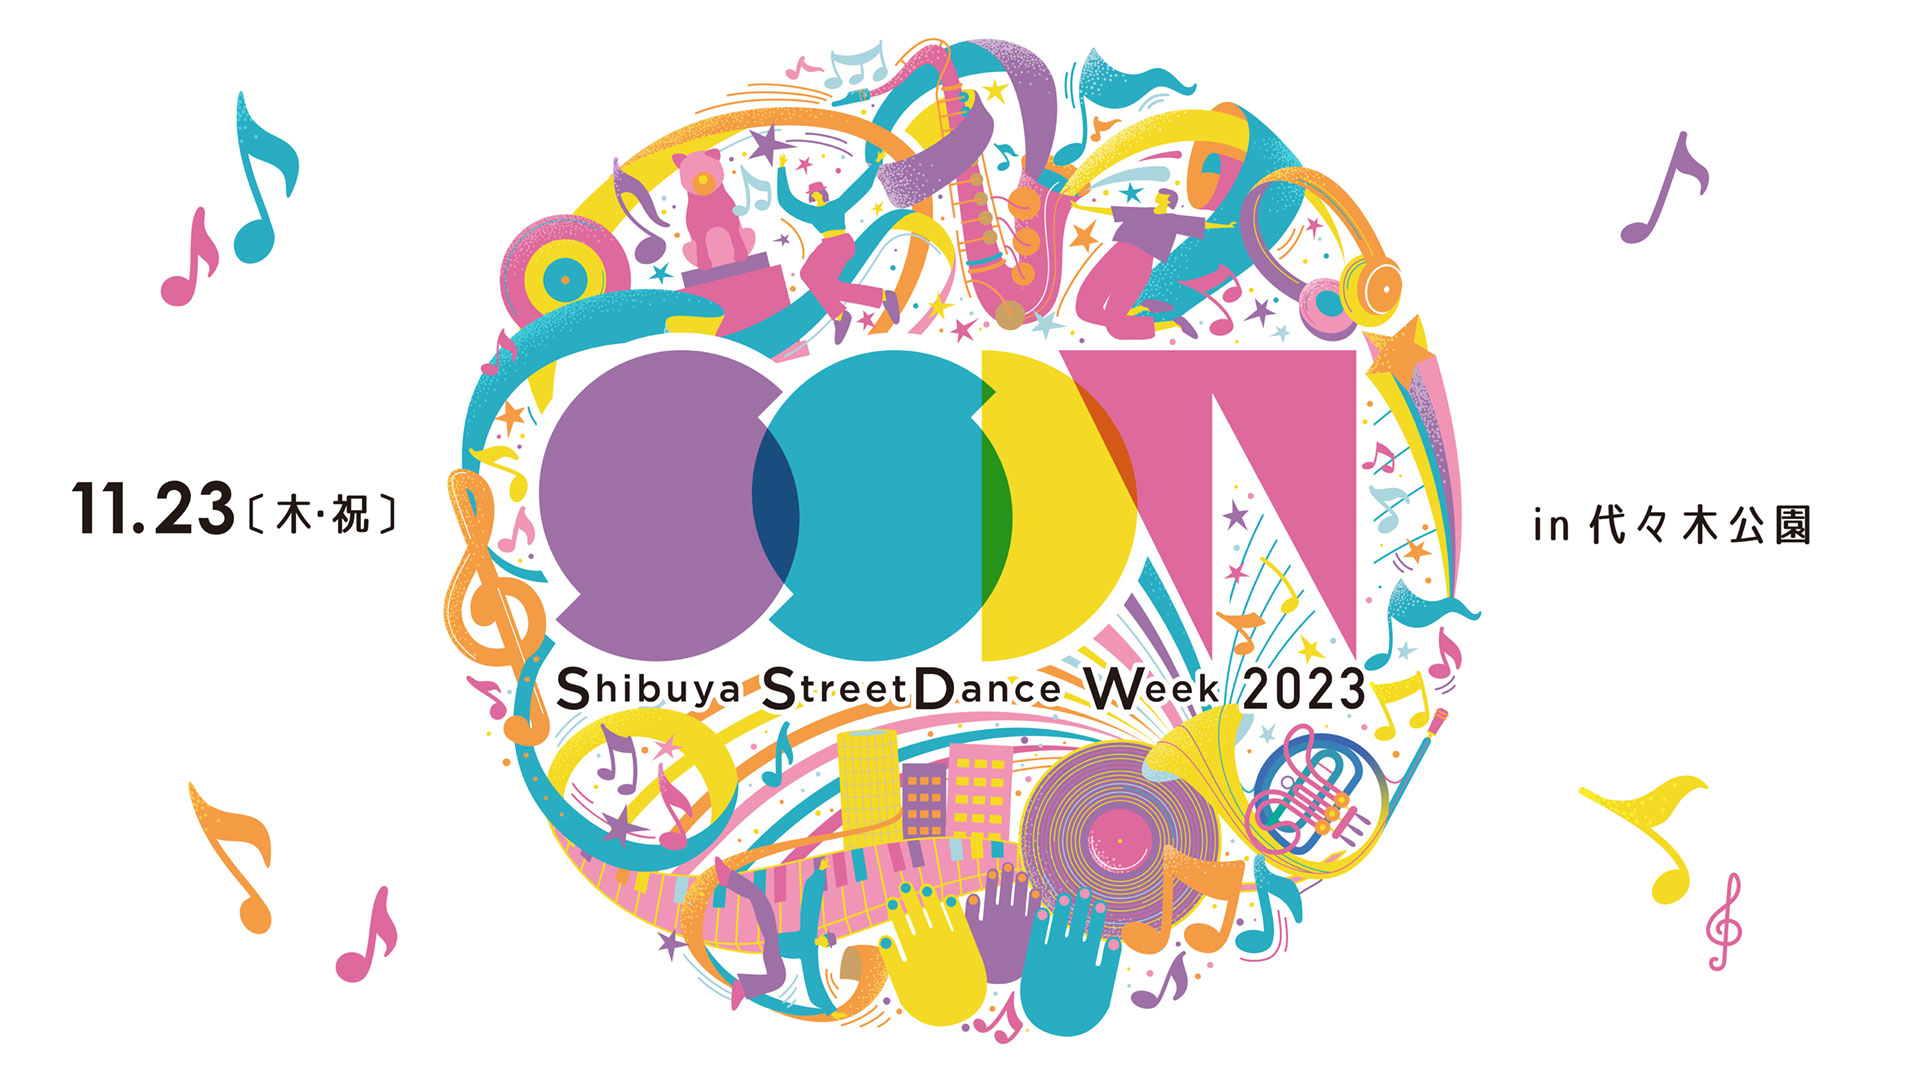 Shibuya Street Dance Week